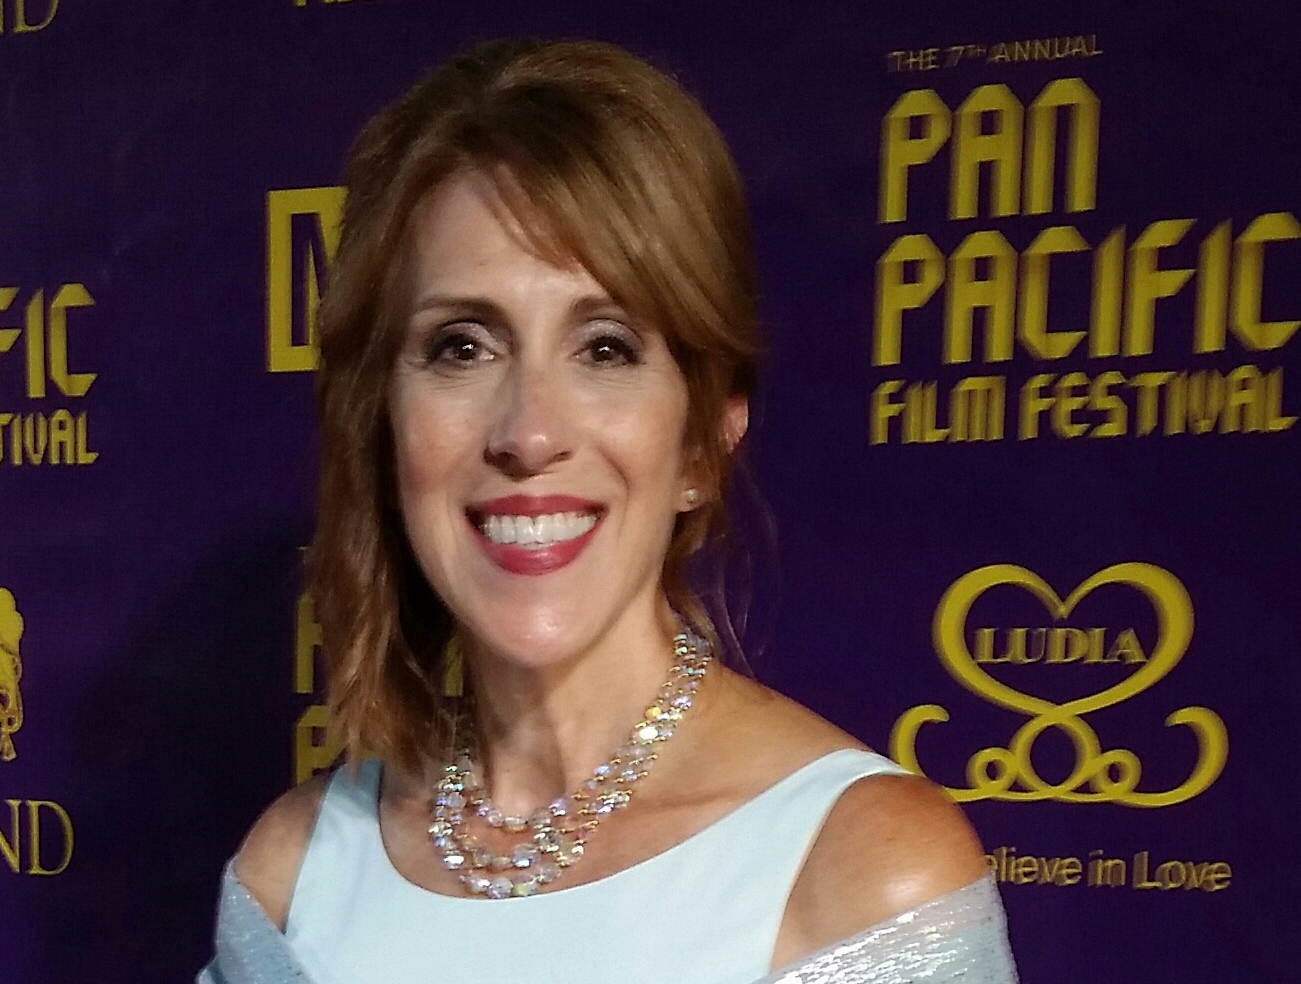 Pan Pacific Film Festival August 2015